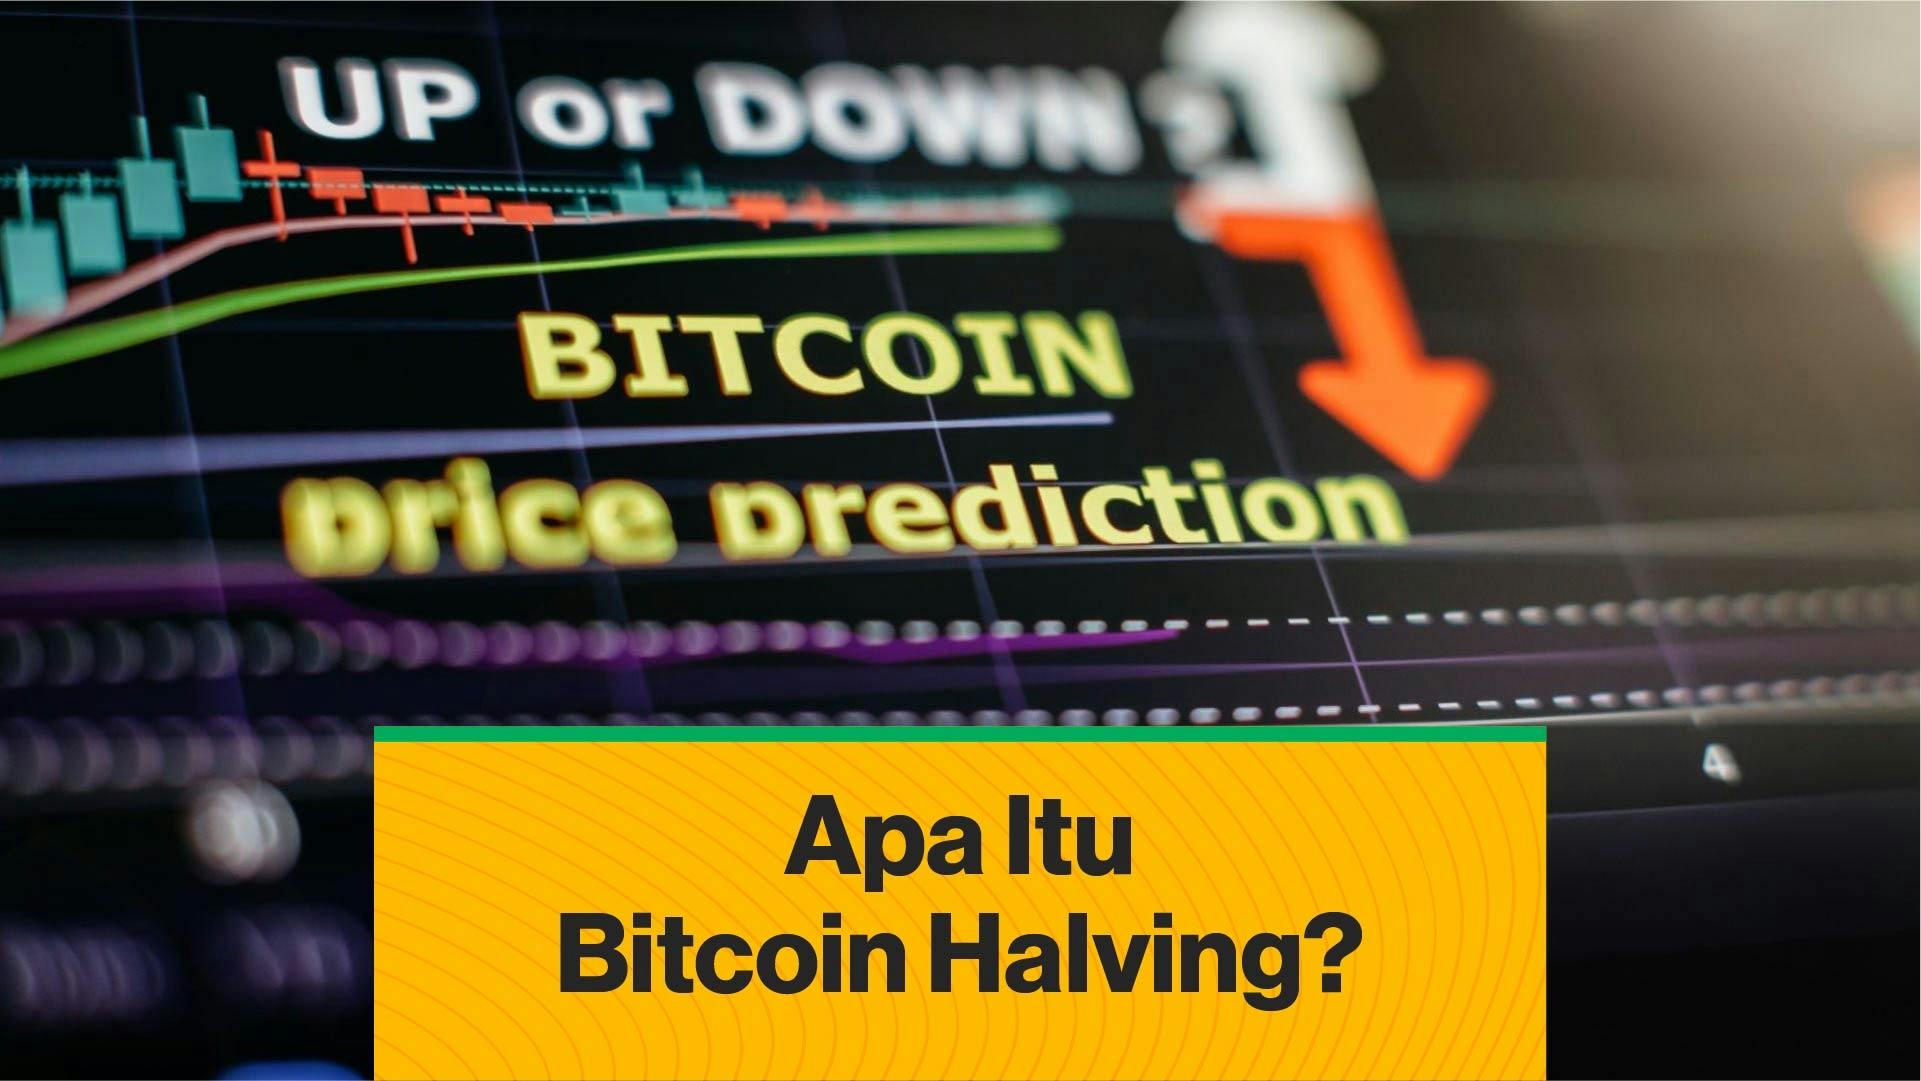 Apa Itu Bitcoin Halving? (Coindesk Indonesia)